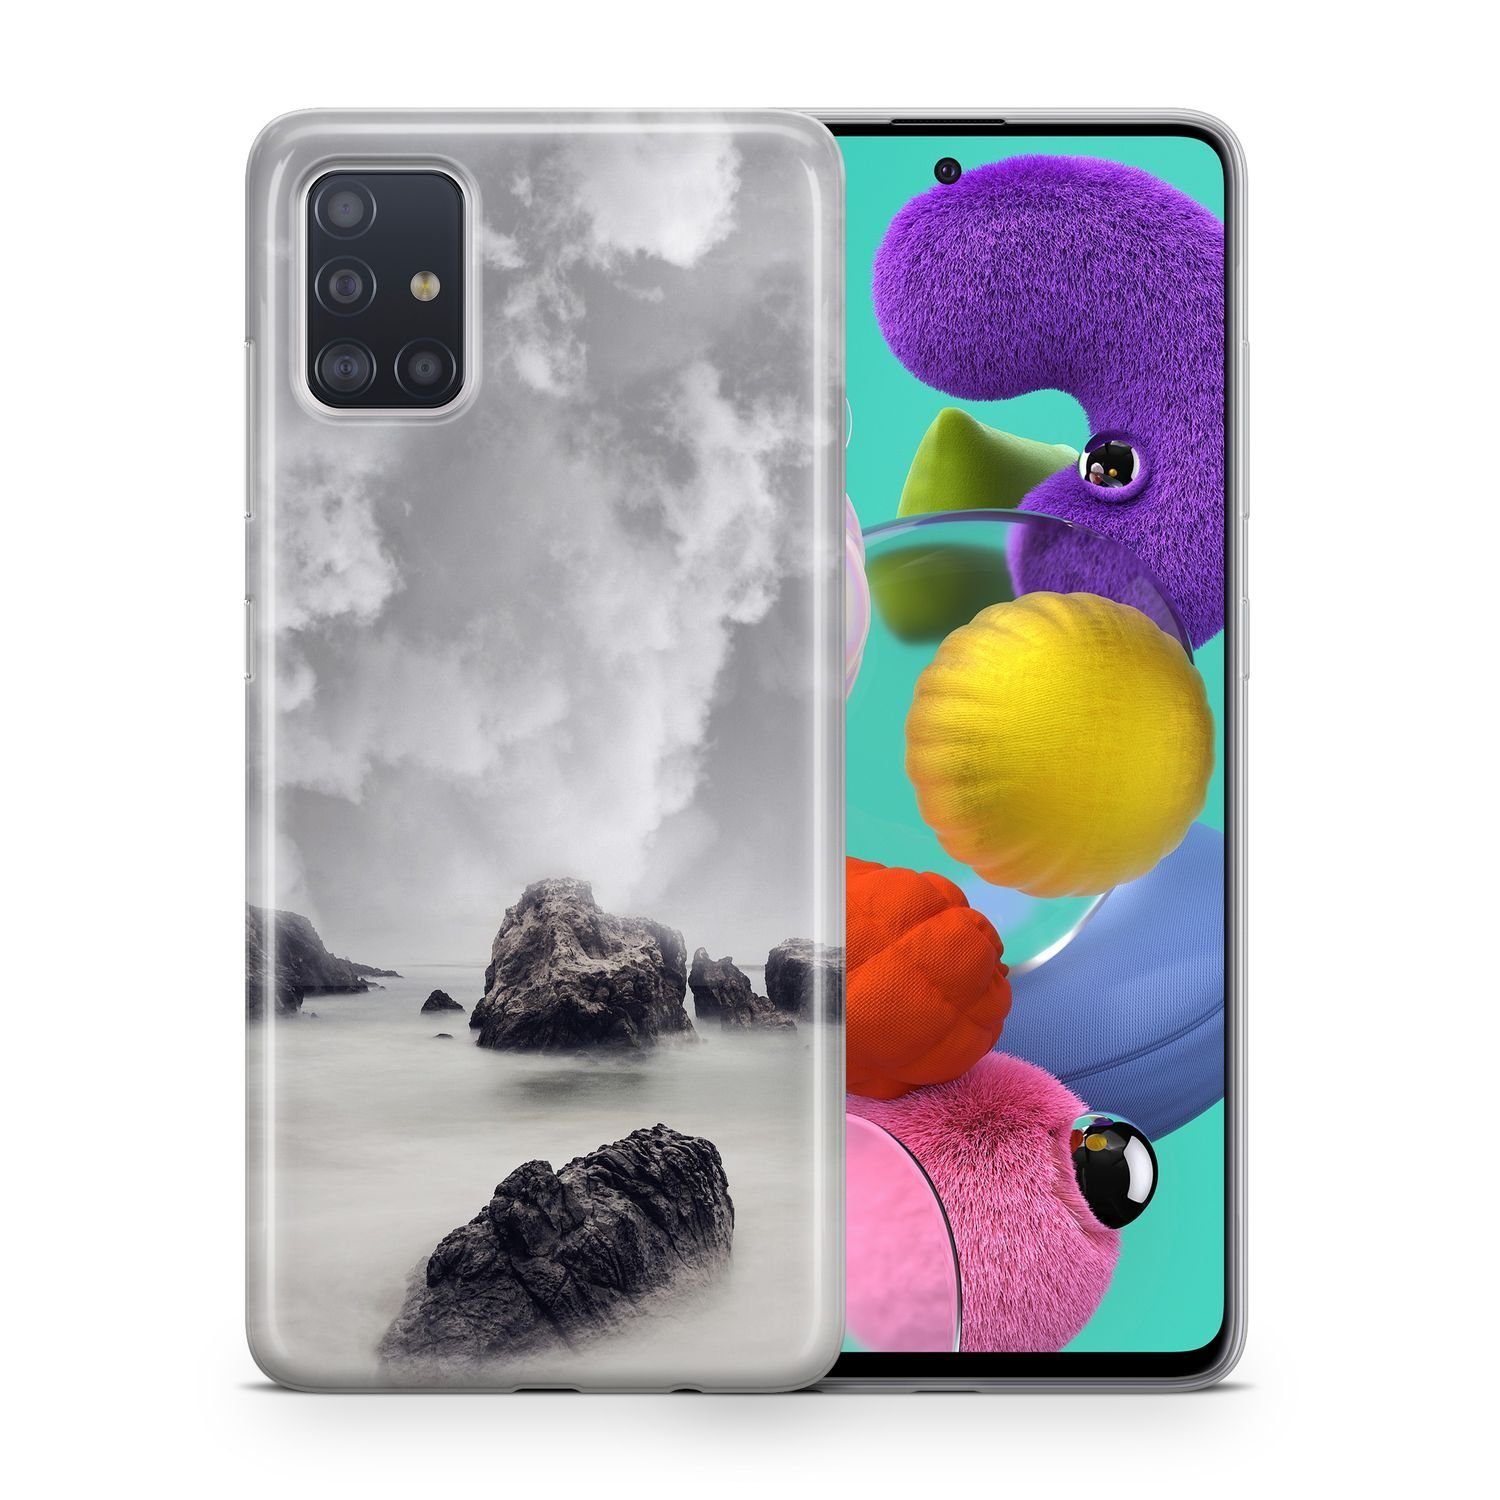 König Design Handyhülle Samsung Galaxy J7 (2017), Schutzhülle für Samsung Galaxy J7 (2017) Motiv Handy Hülle Silikon Tasche Case Cover Felsen Wolken